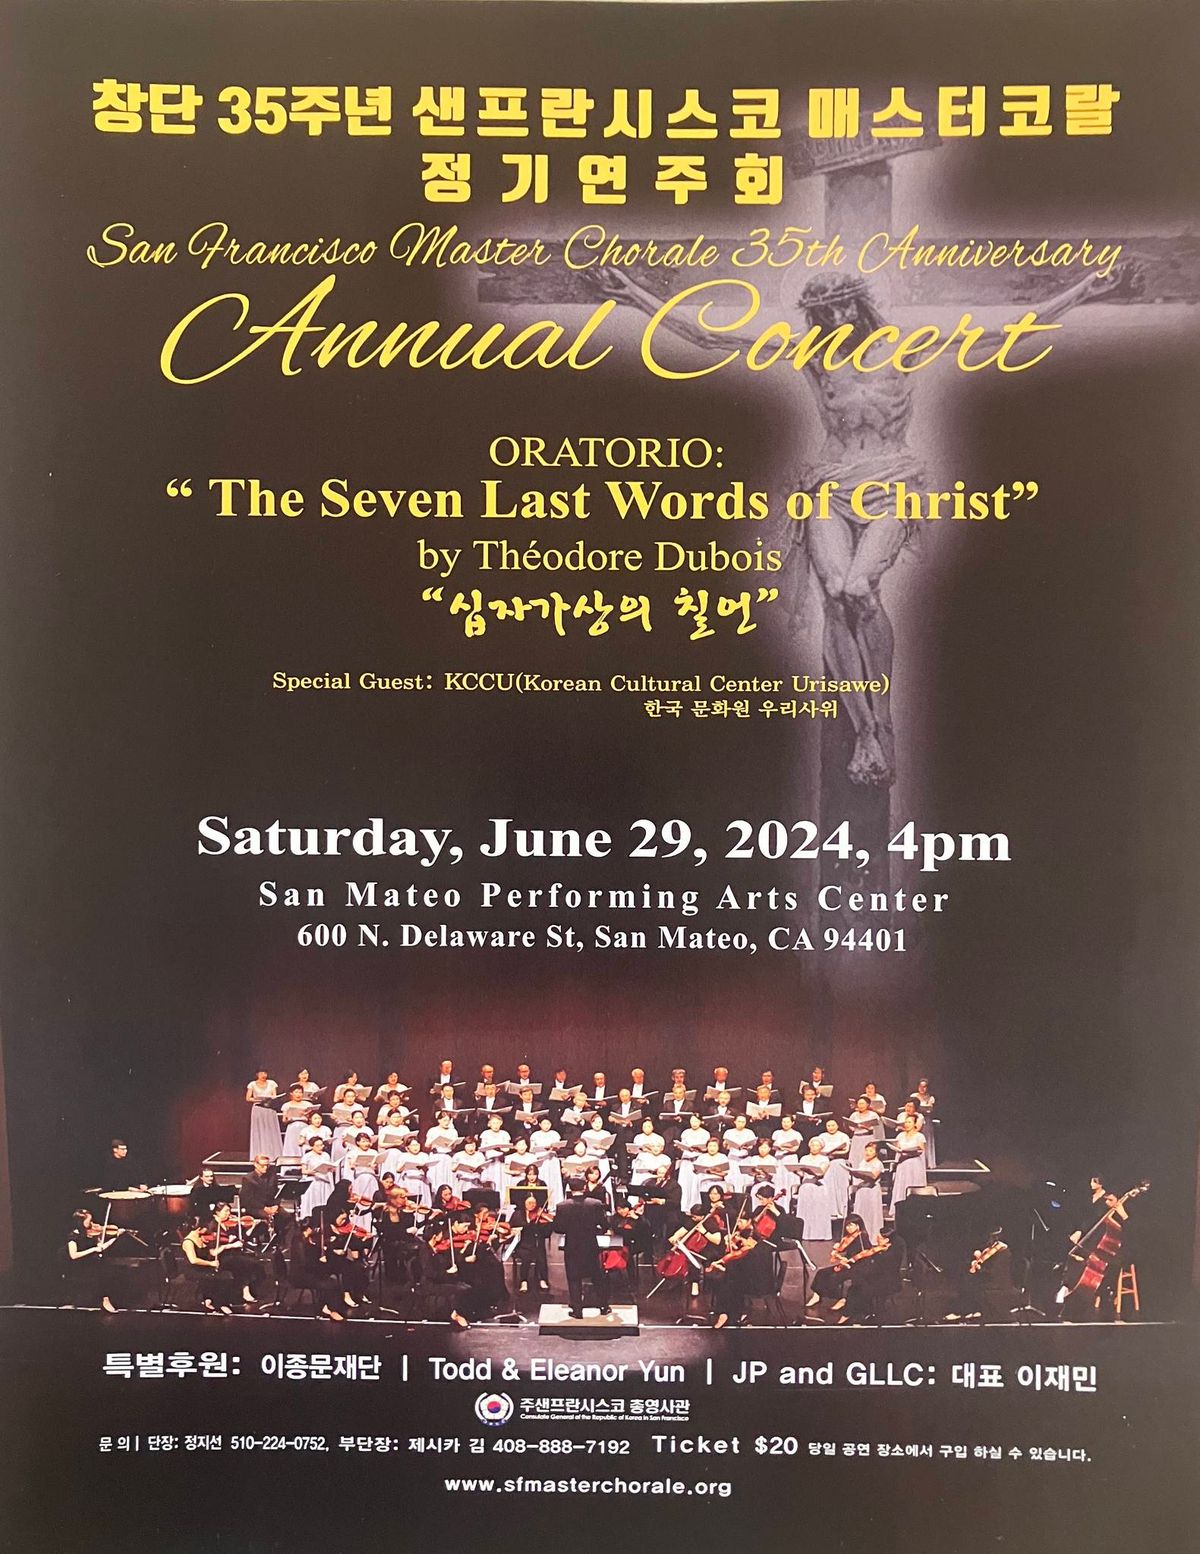 San Francisco Master Chorale 35th Anniversary Concert